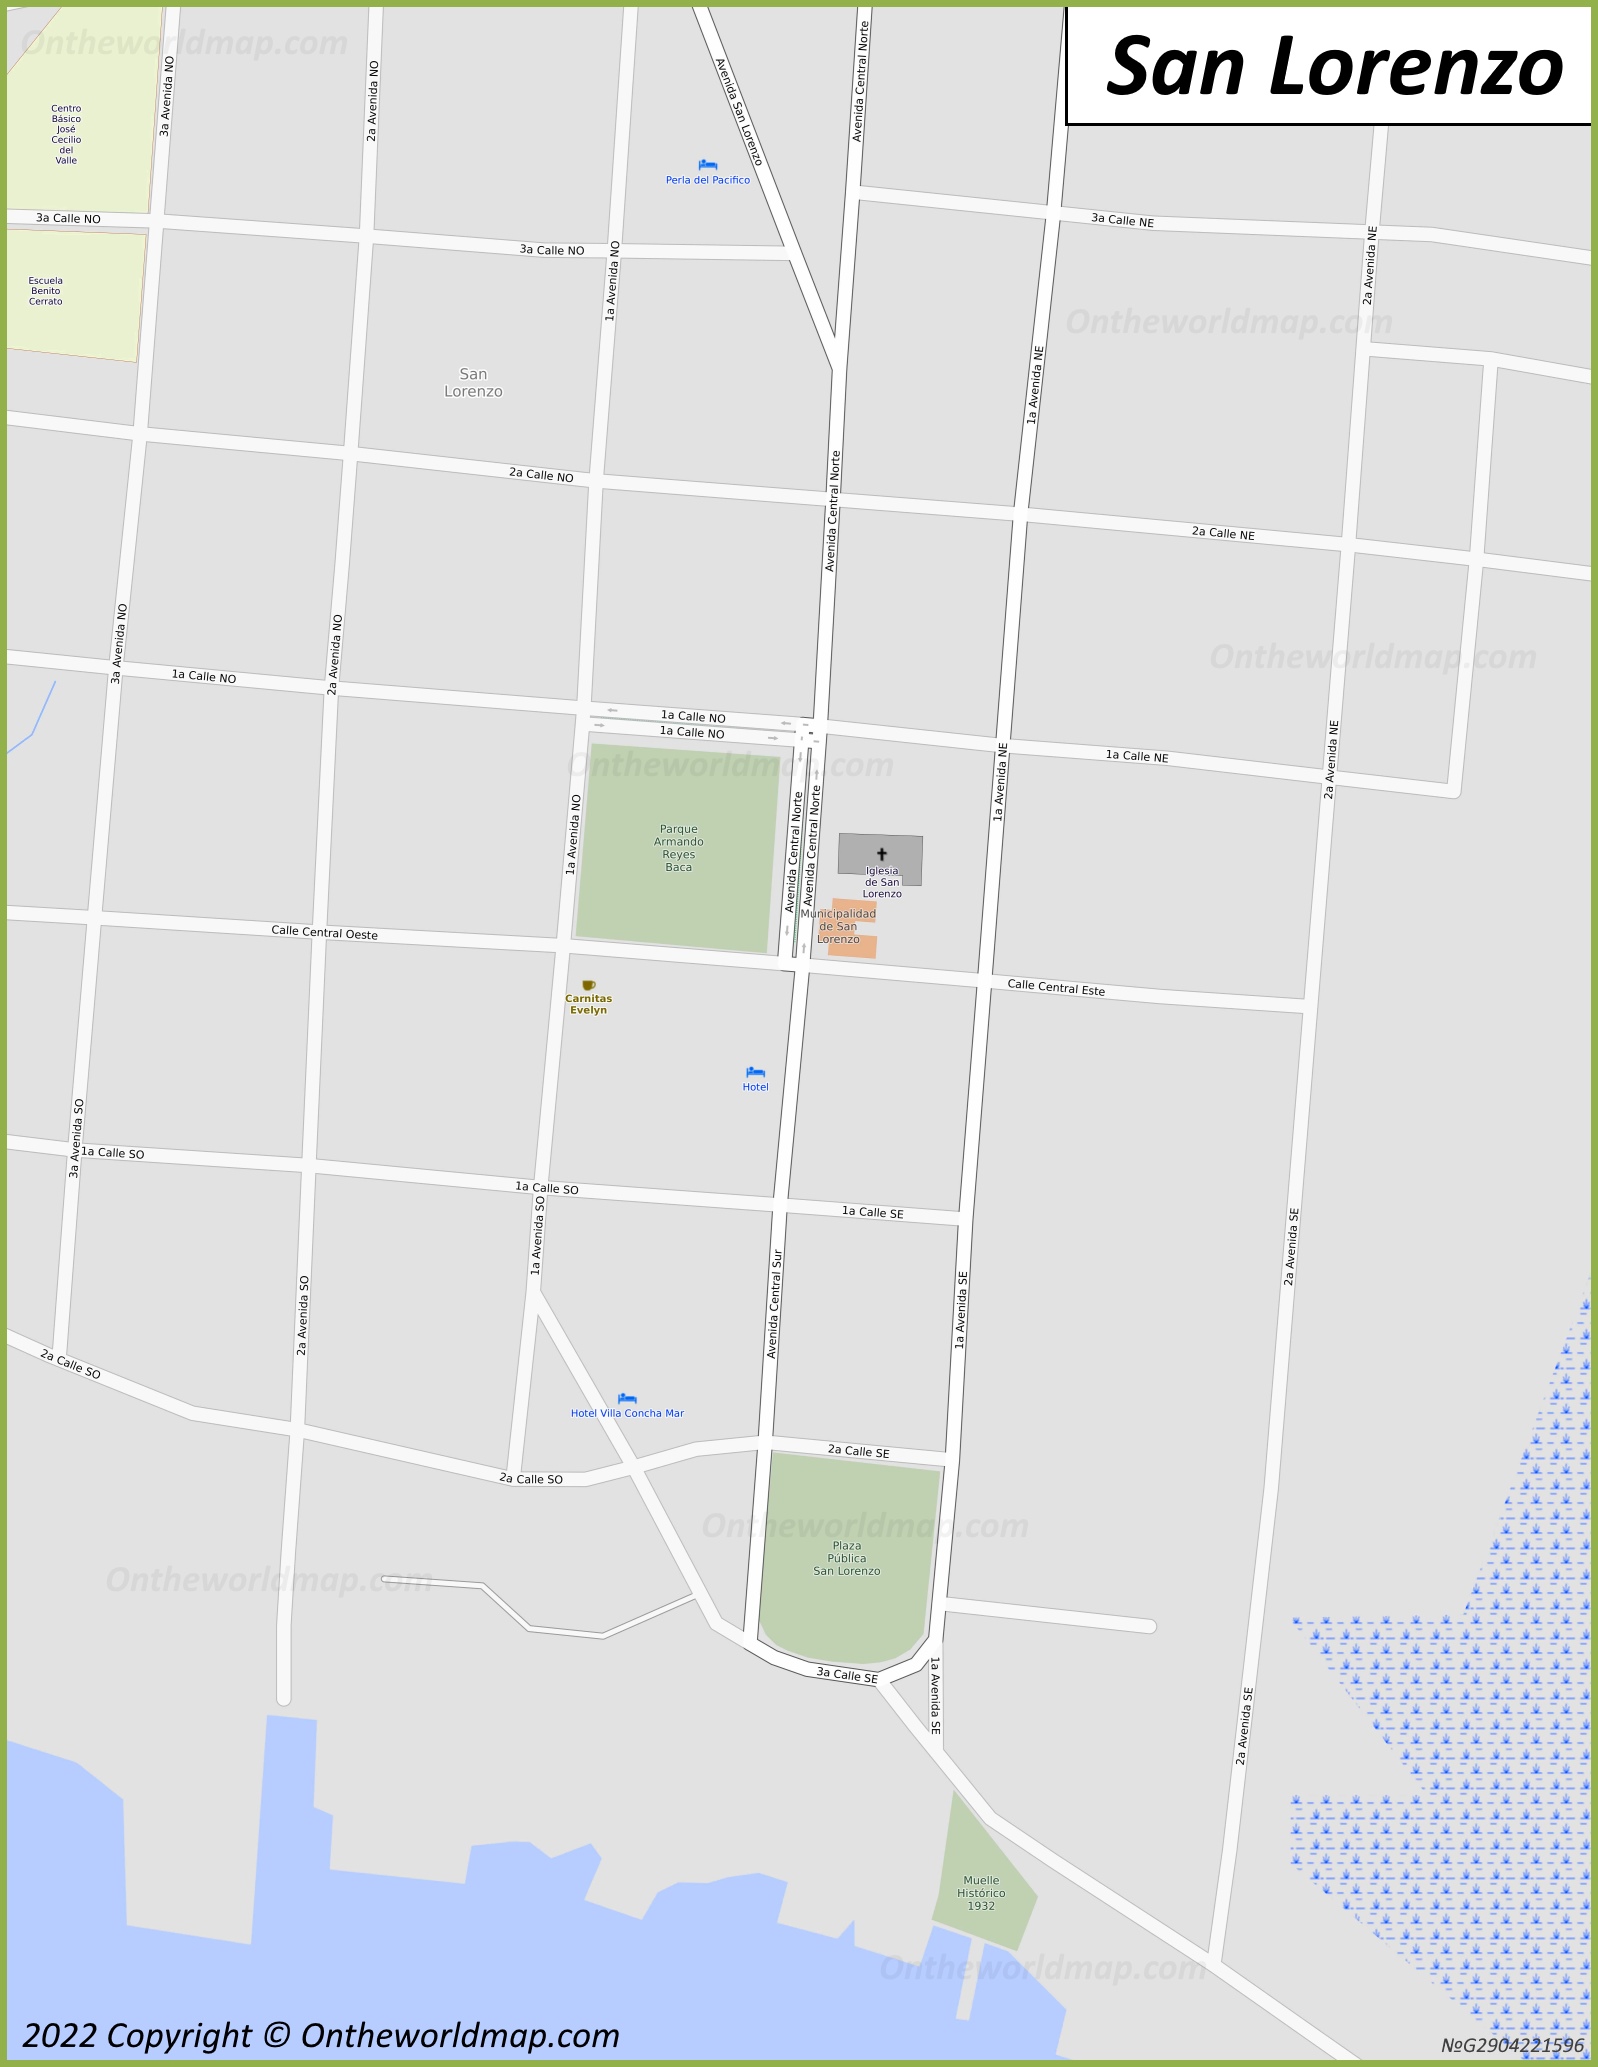 San Lorenzo City Centre Map